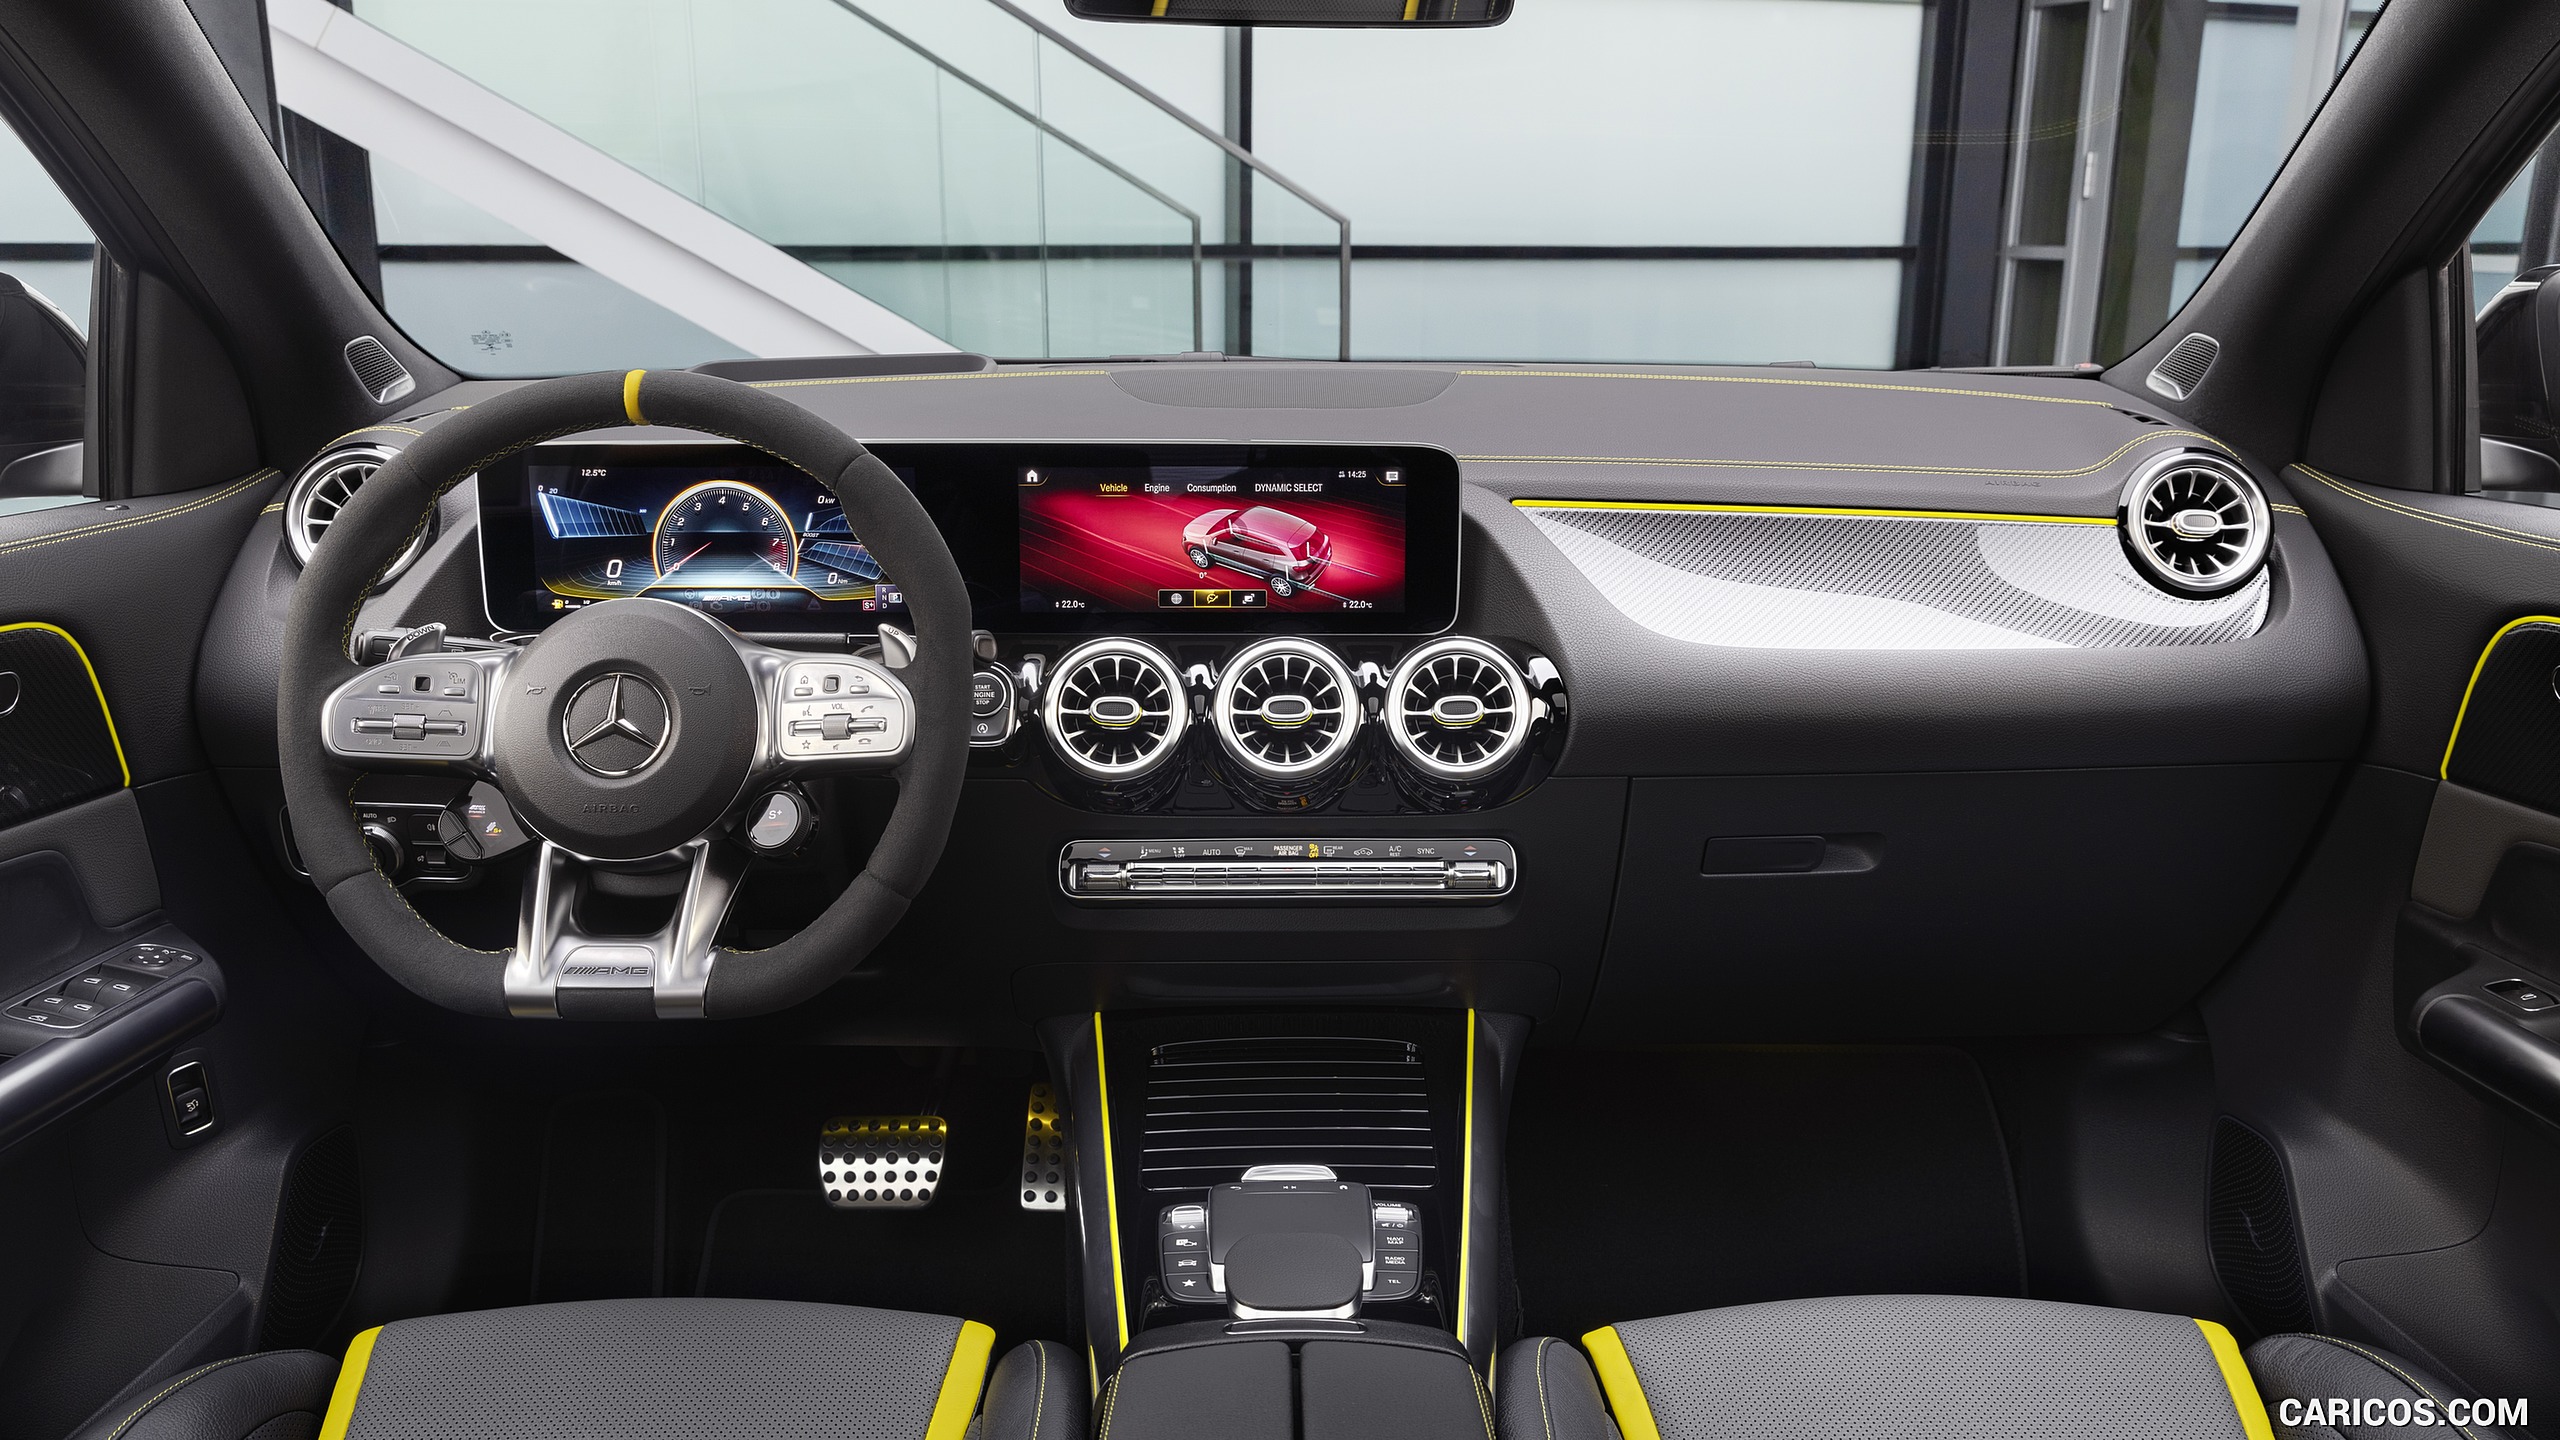 2021 Mercedes-AMG GLA 45 S 4MATIC+ - Interior, Cockpit, #20 of 97